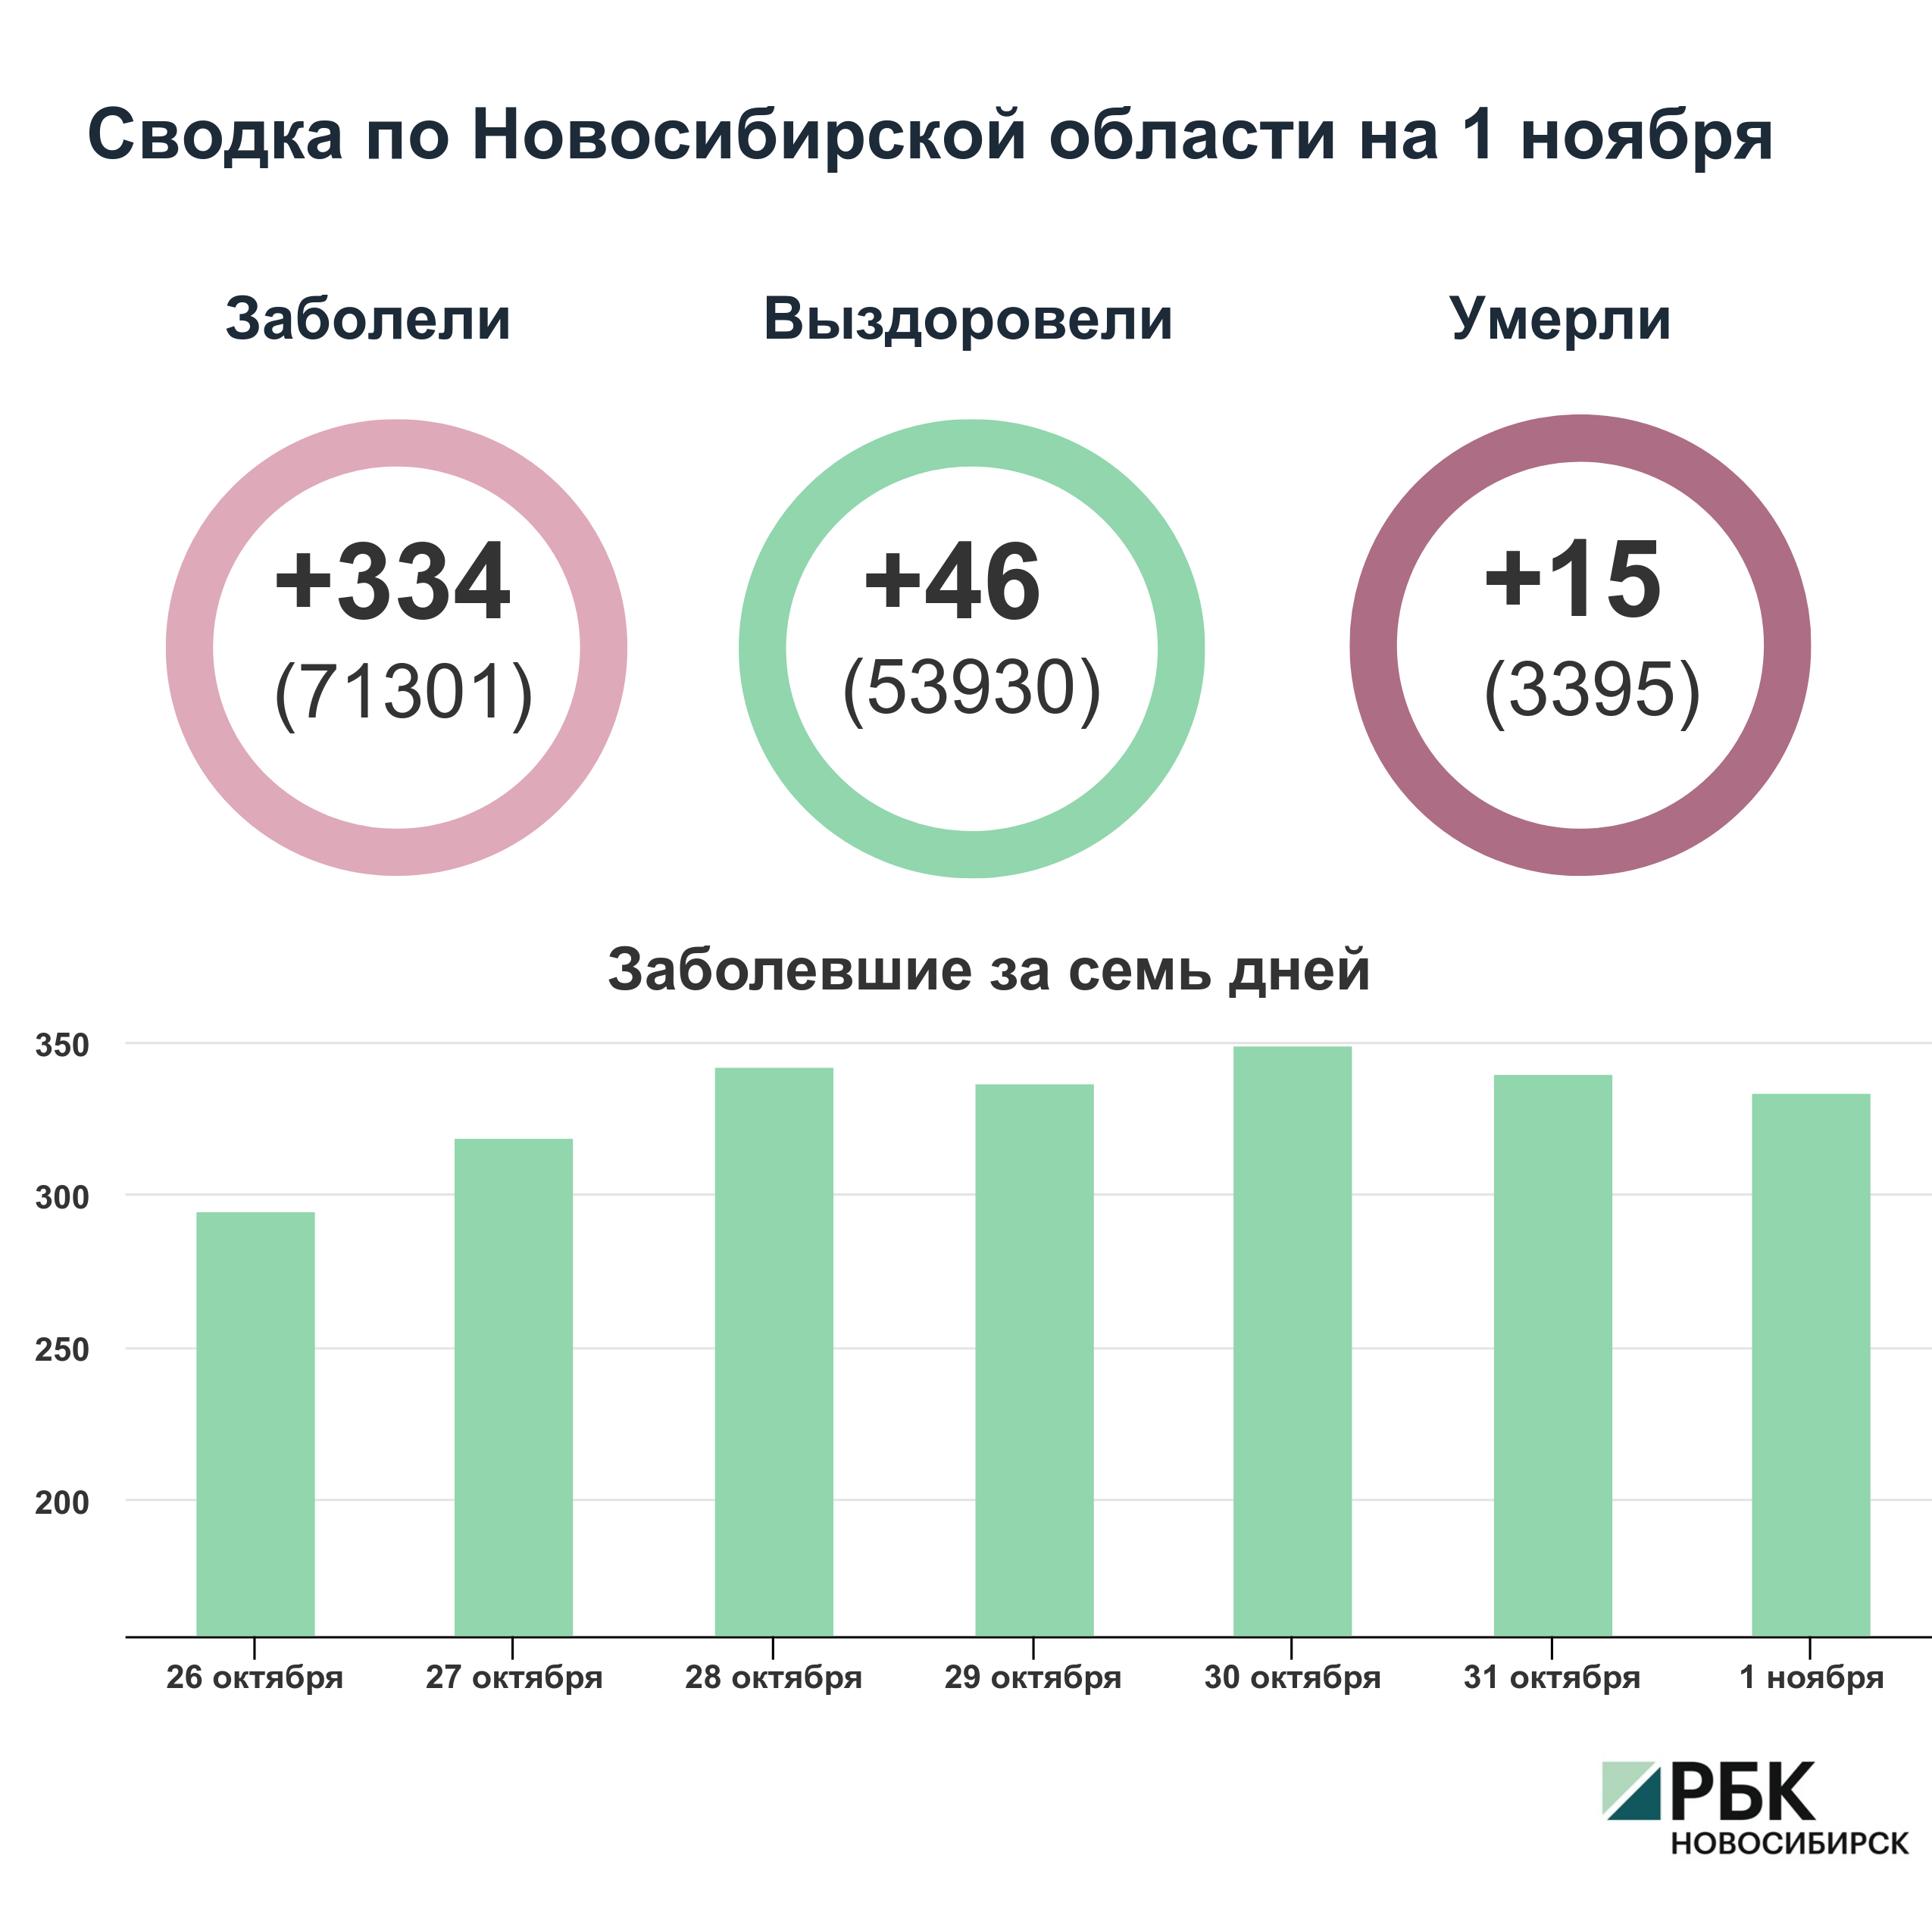 Коронавирус в Новосибирске: сводка на 1 ноября